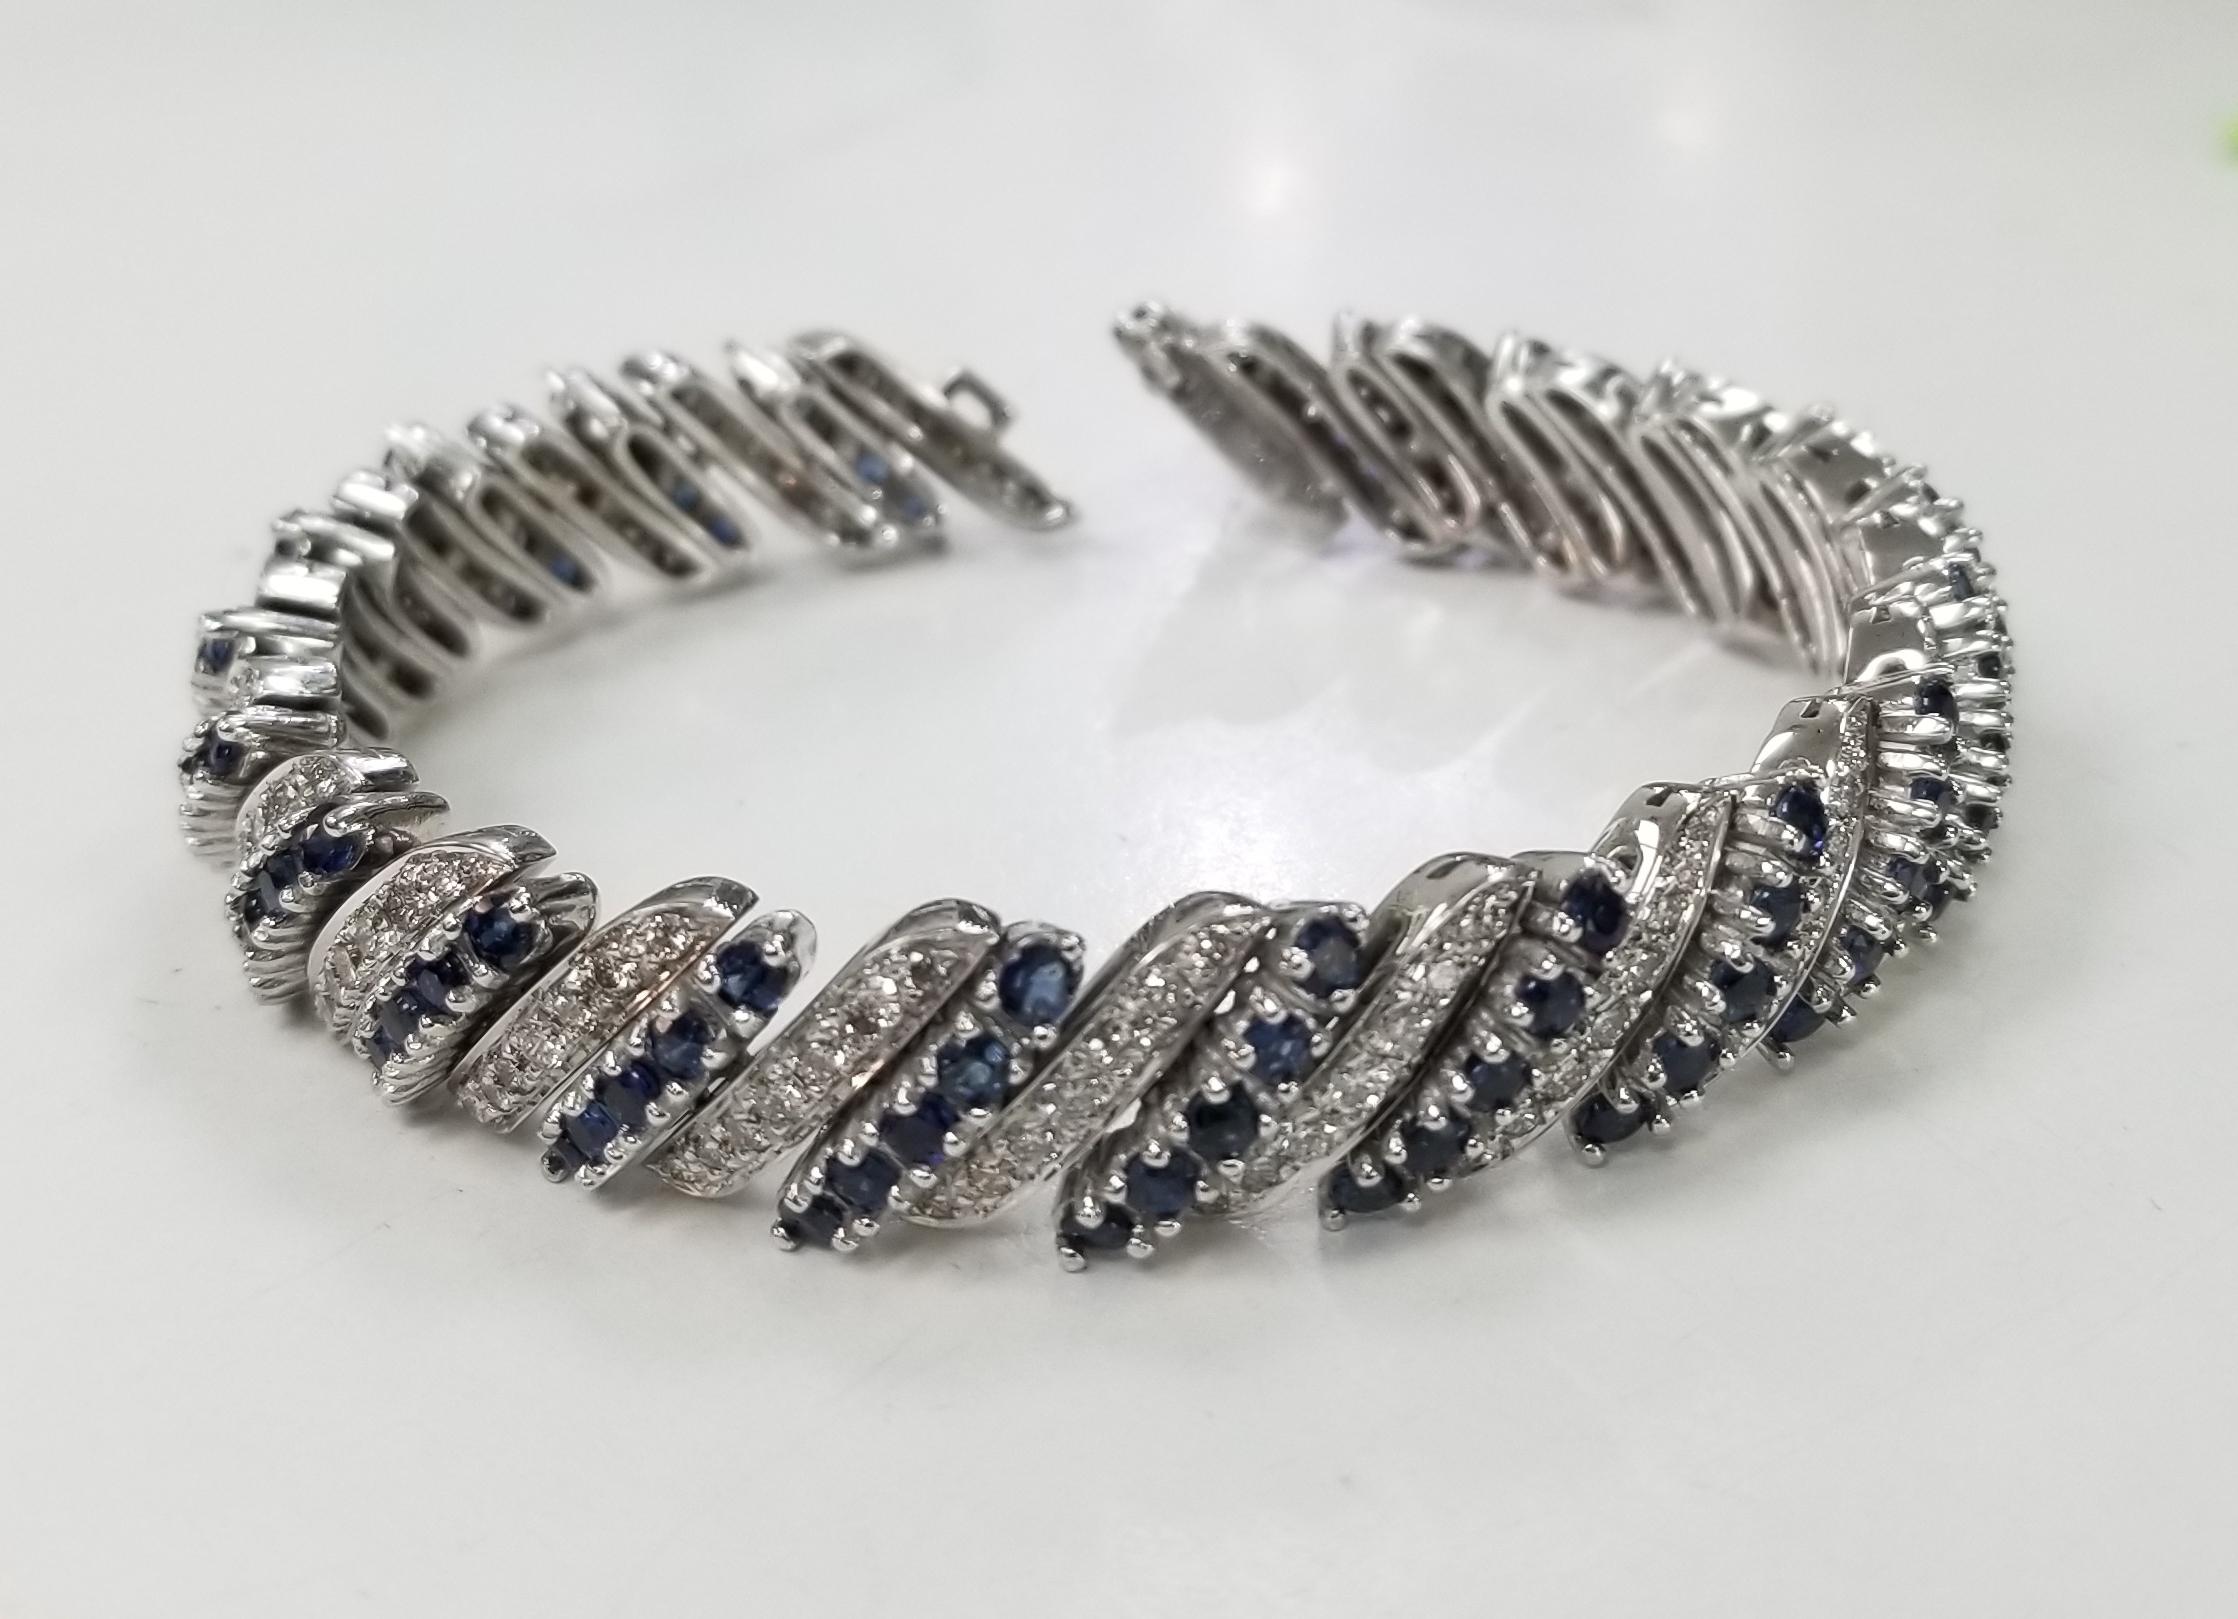 Circa 1960s 14 karat white gold Diamond and Sapphire flexible bracelet, containing 147 round full cut diamonds; color 